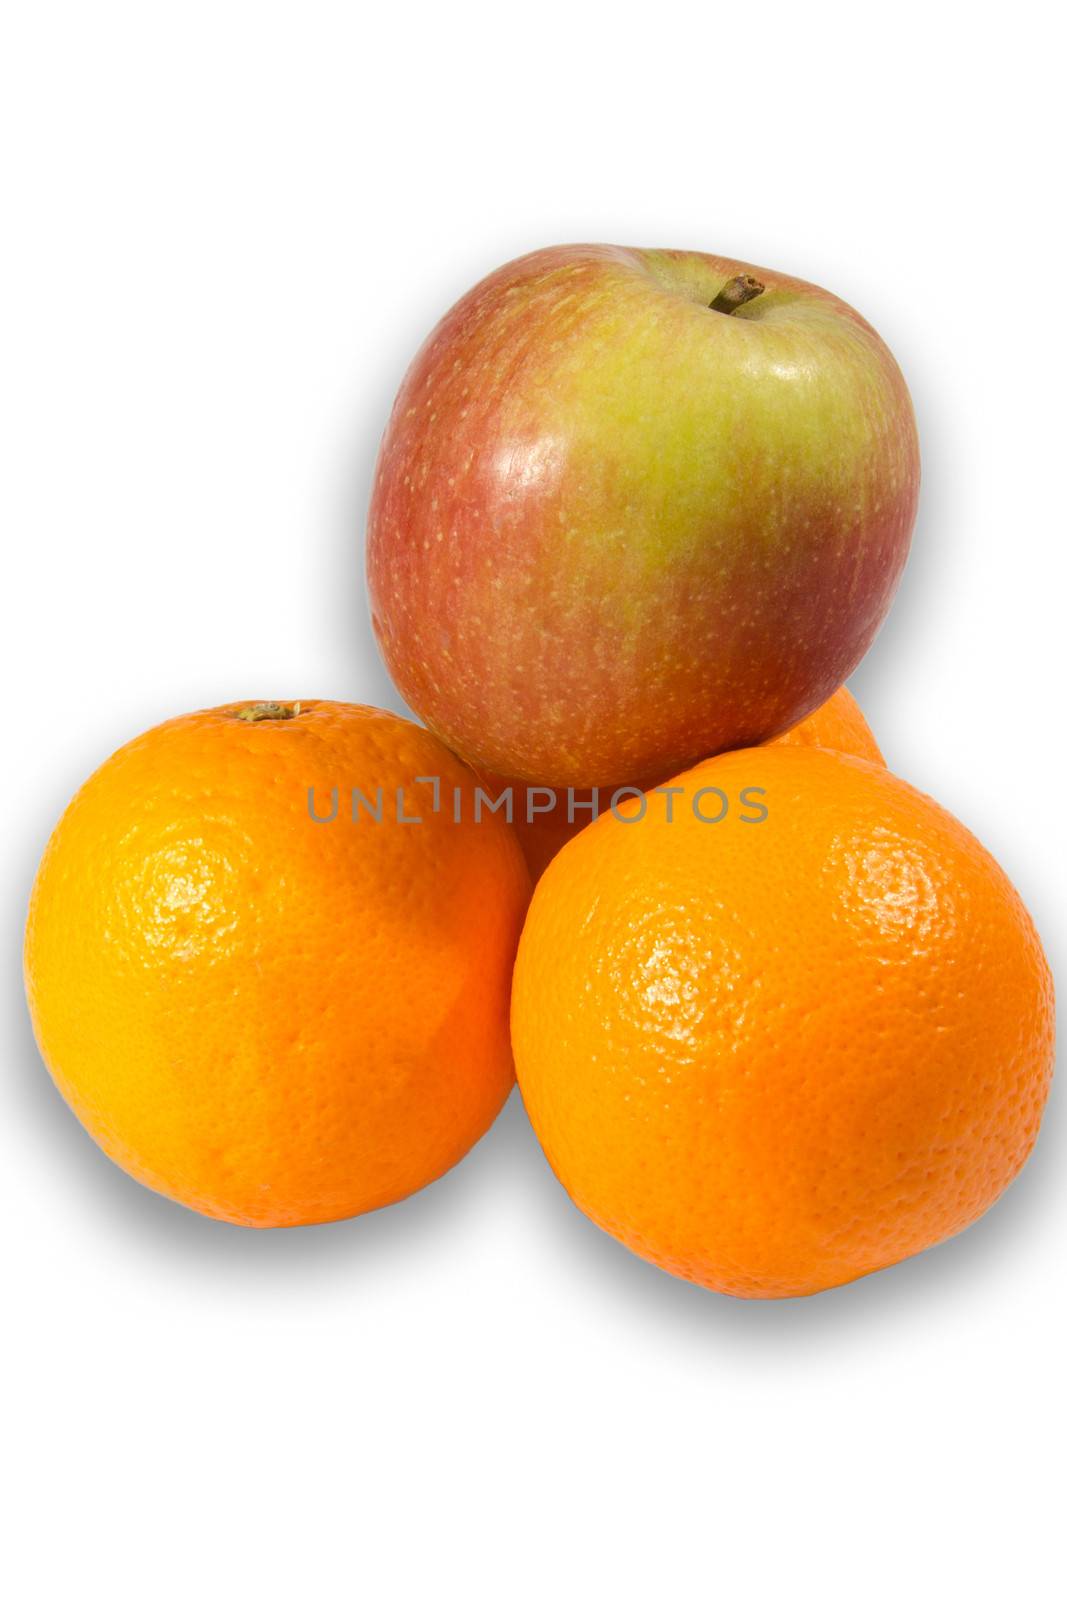 Orange and Apple creating a triangular pyramid by Cursedsenses